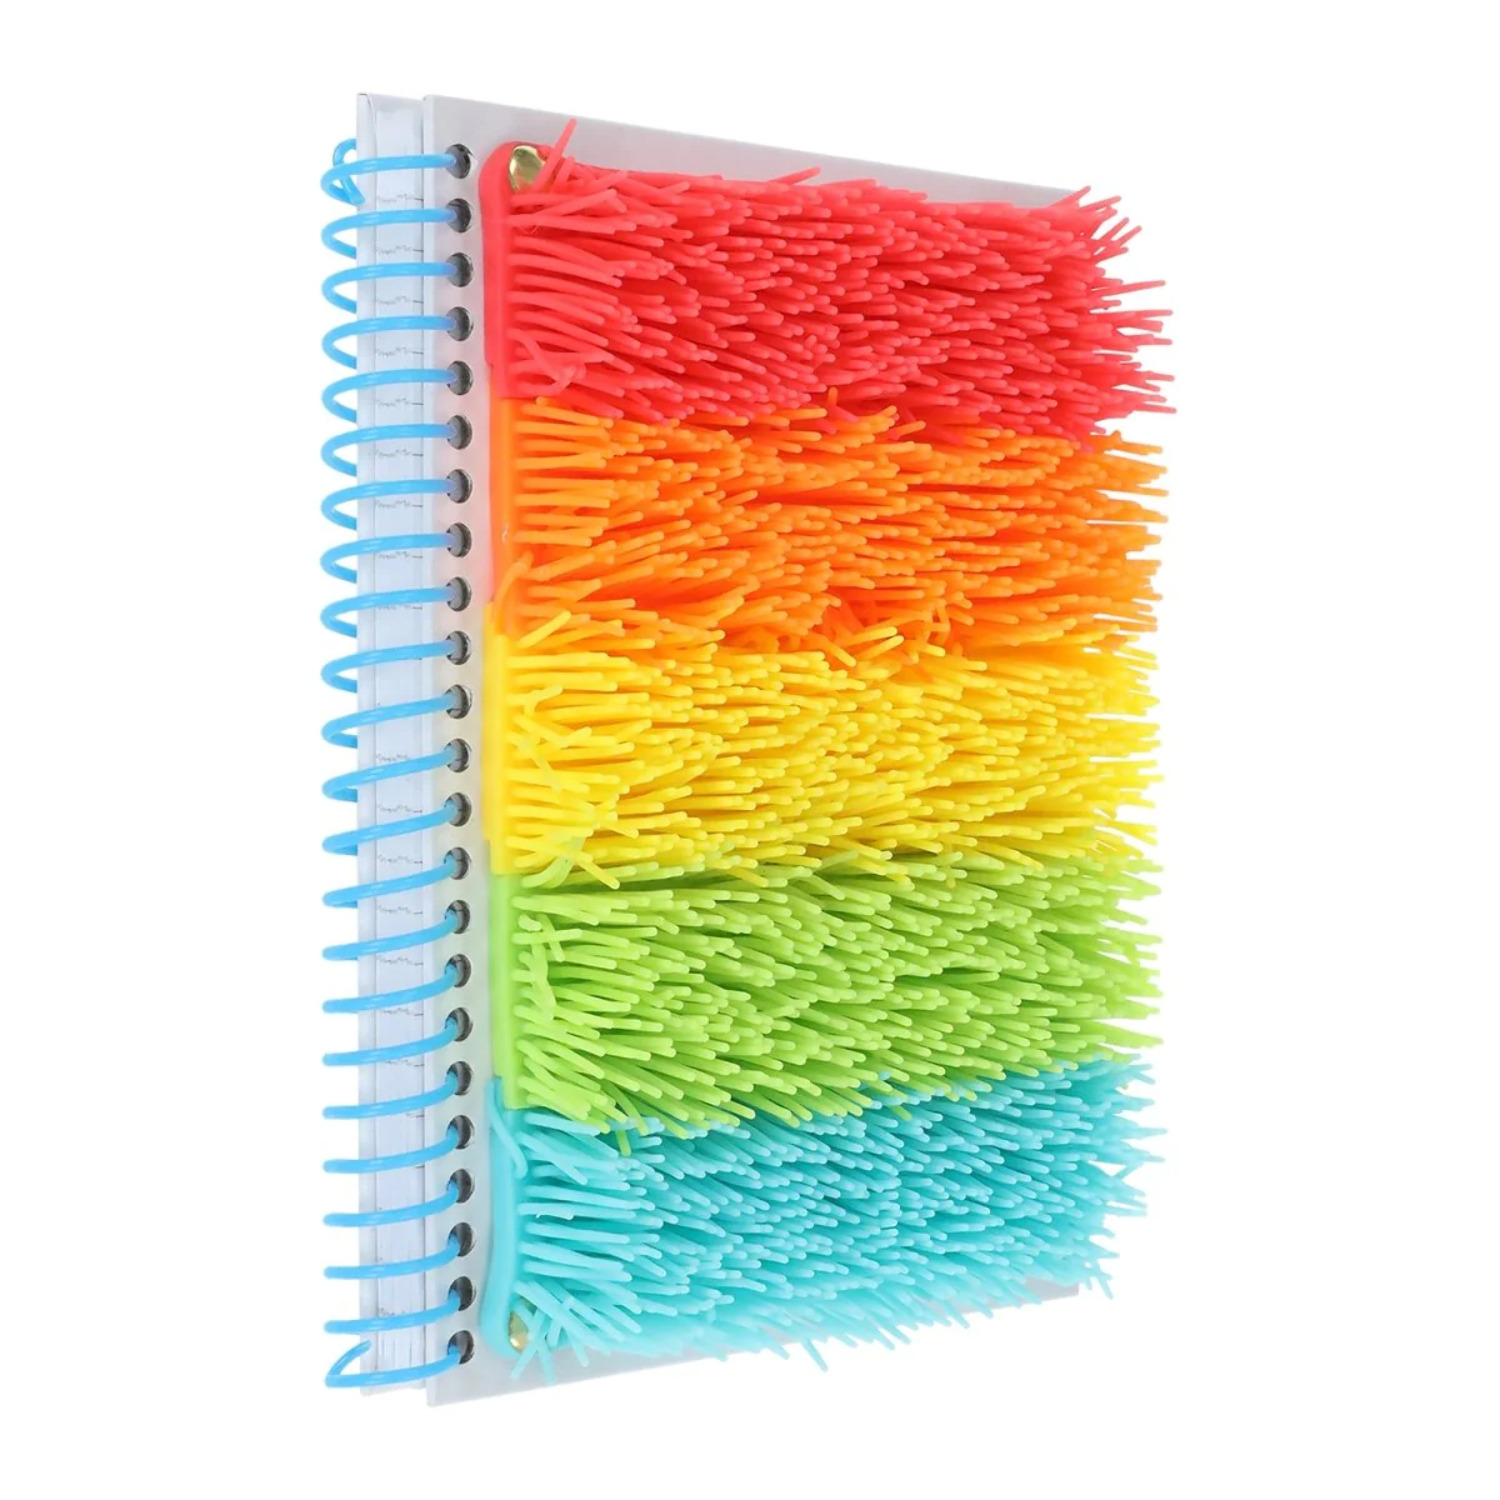 Zegsy rainbow sensory journal - image 4 of 5